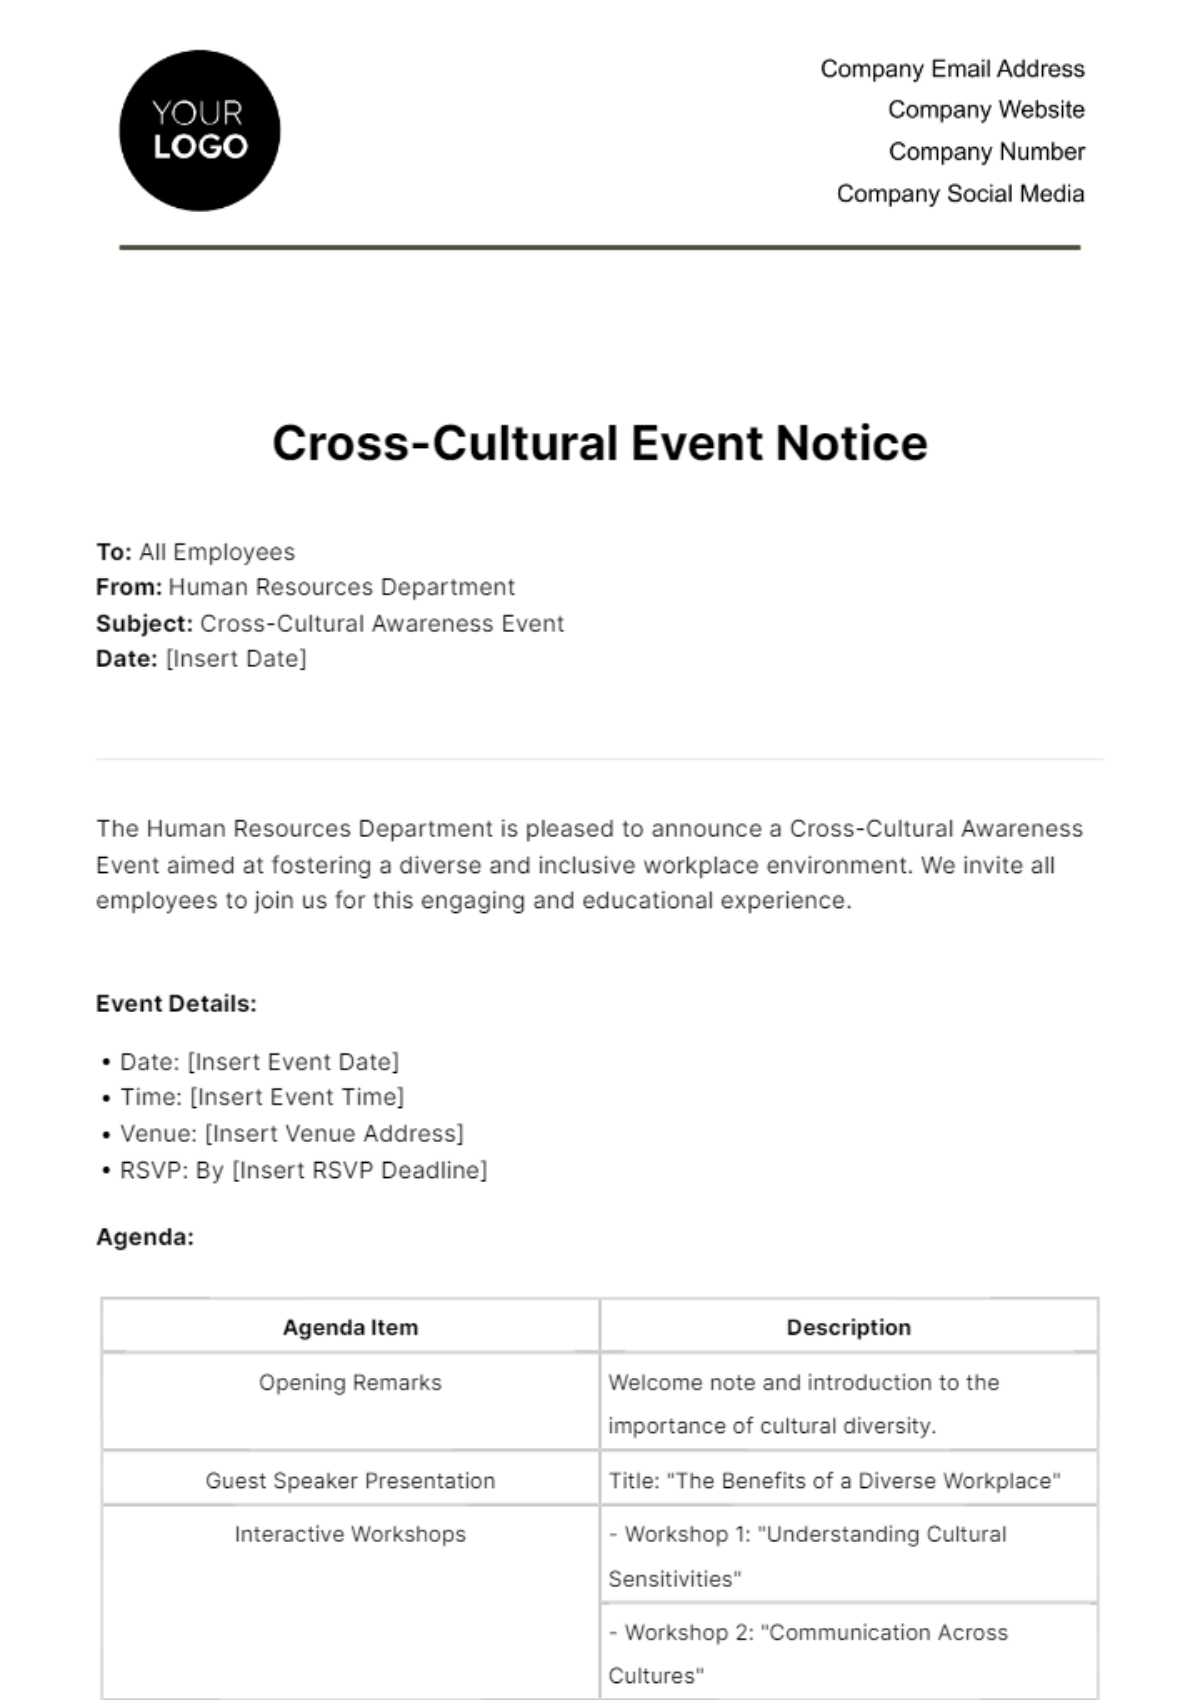 Cross-Cultural Event Notice HR Template